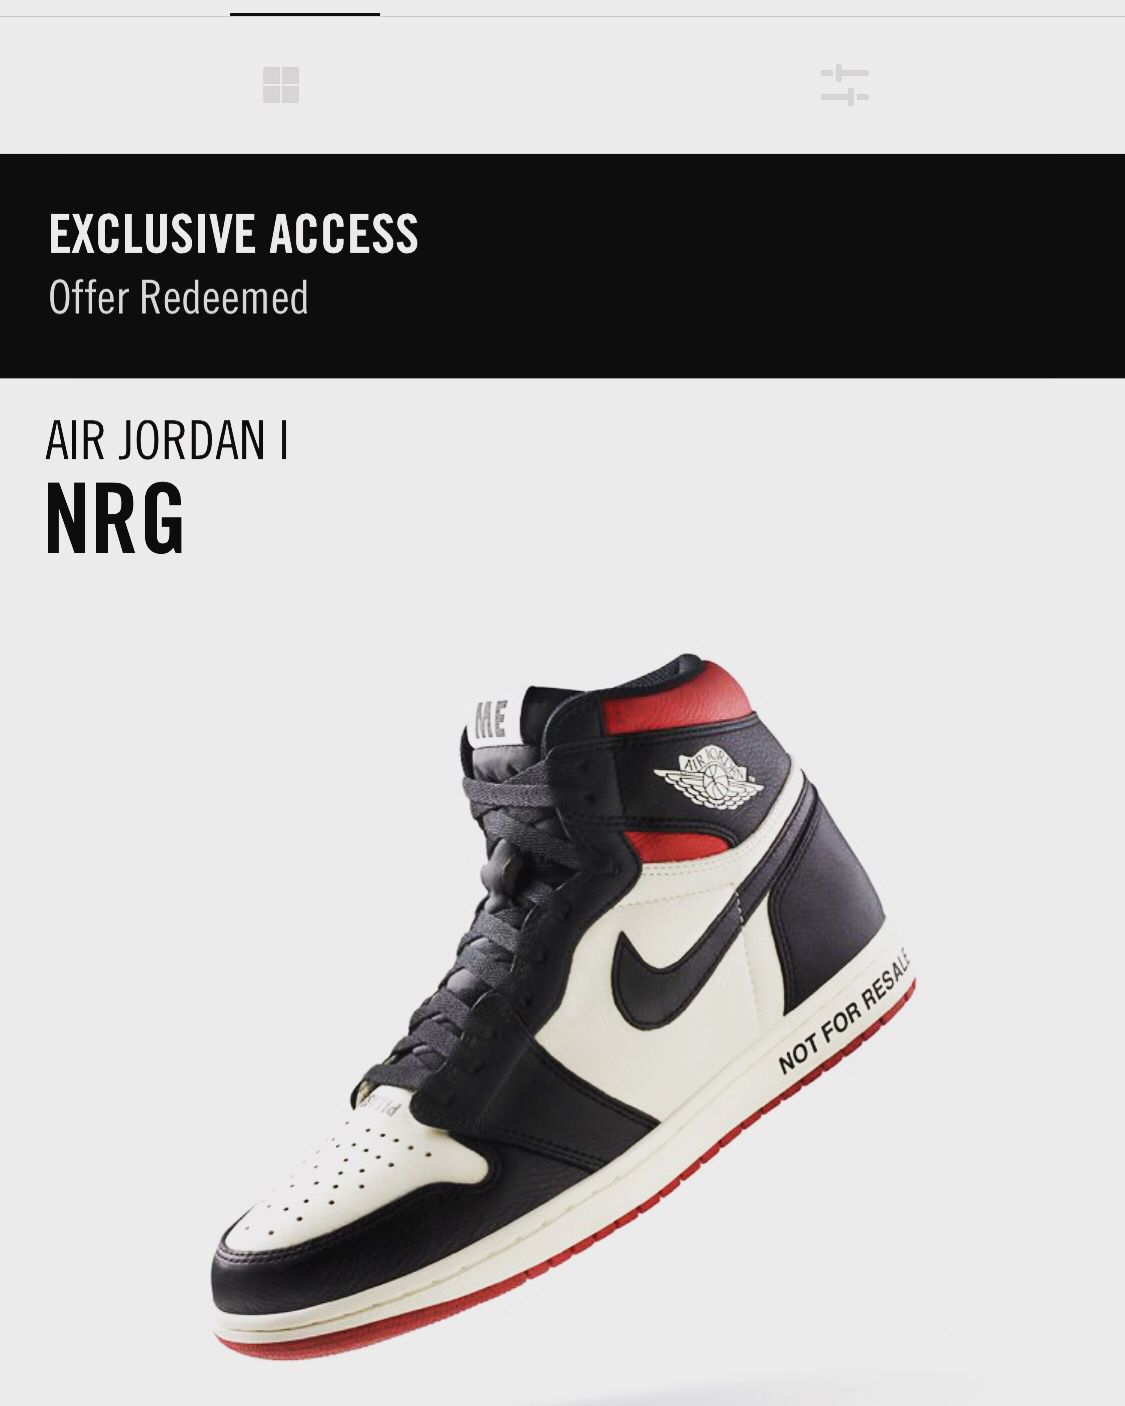 Jordan 1 “not for resale” size 8.5